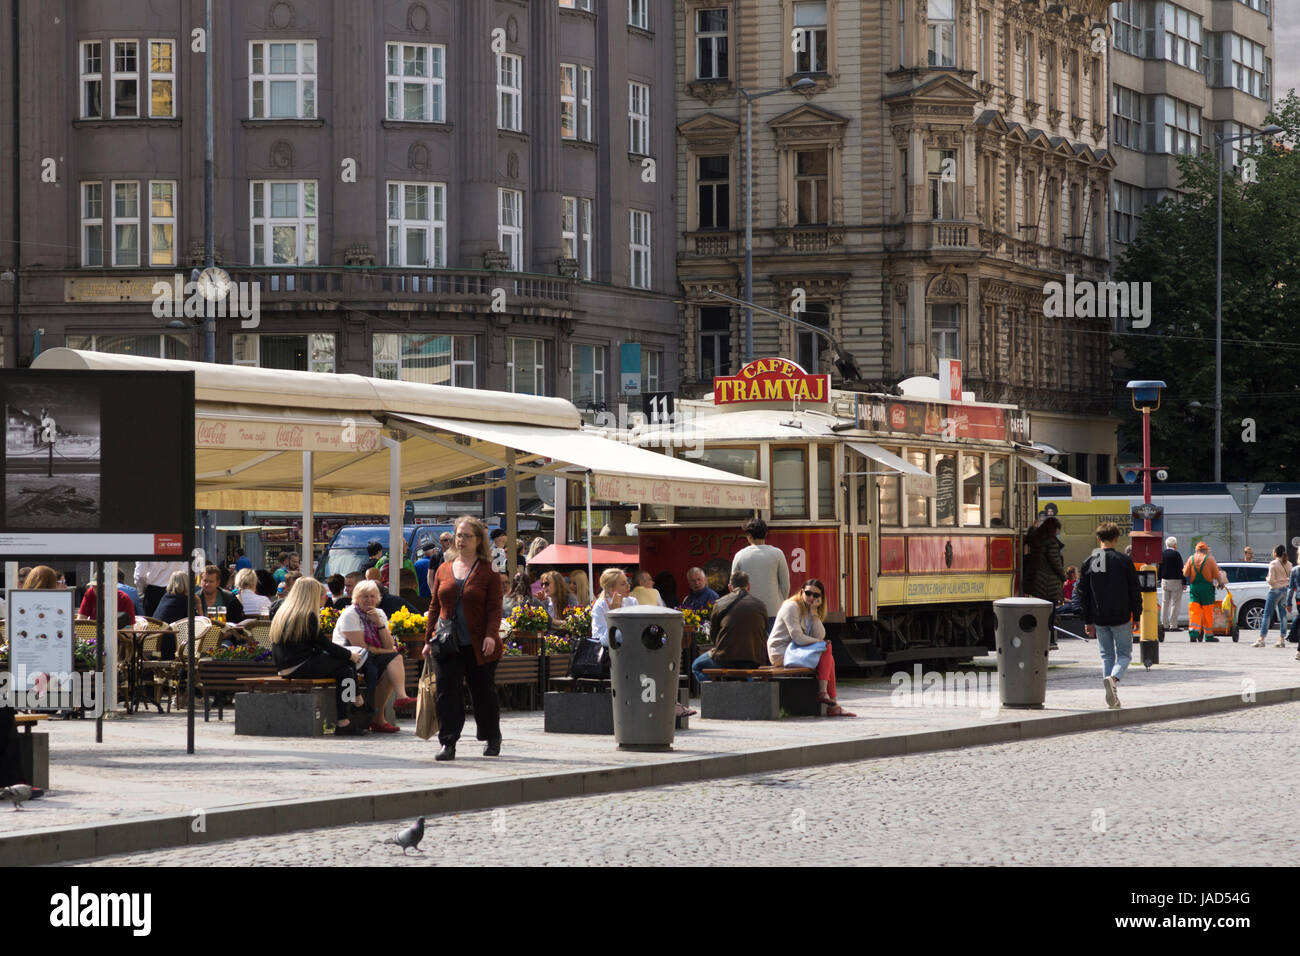 Cafe Tramvaj on a summer's day, a converted tram in Prague, Czech Republic Stock Photo